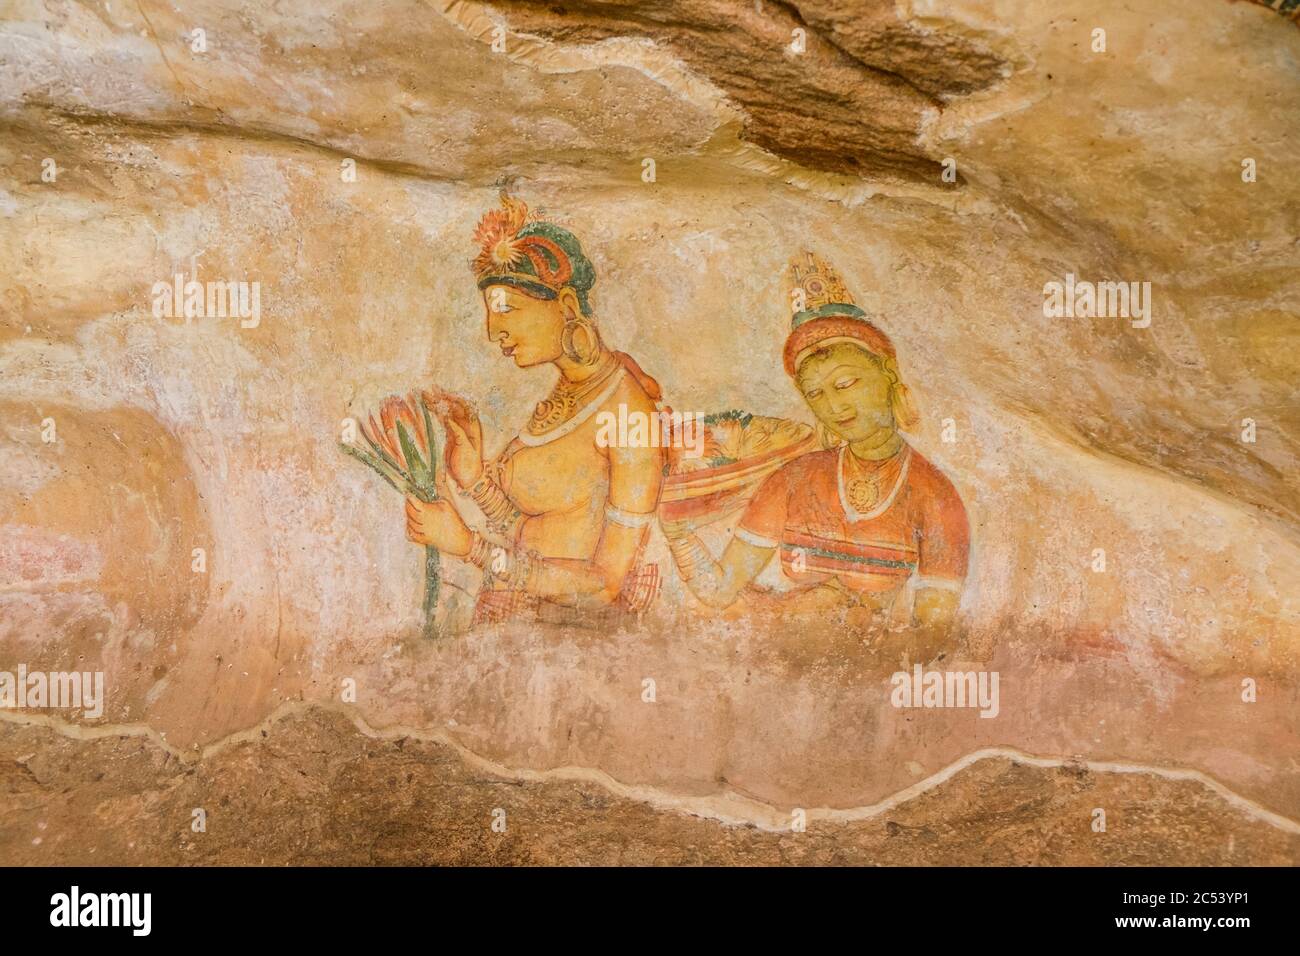 Mural painting in a cave at the Sigiriya rock, Sri Lanka Stock Photo